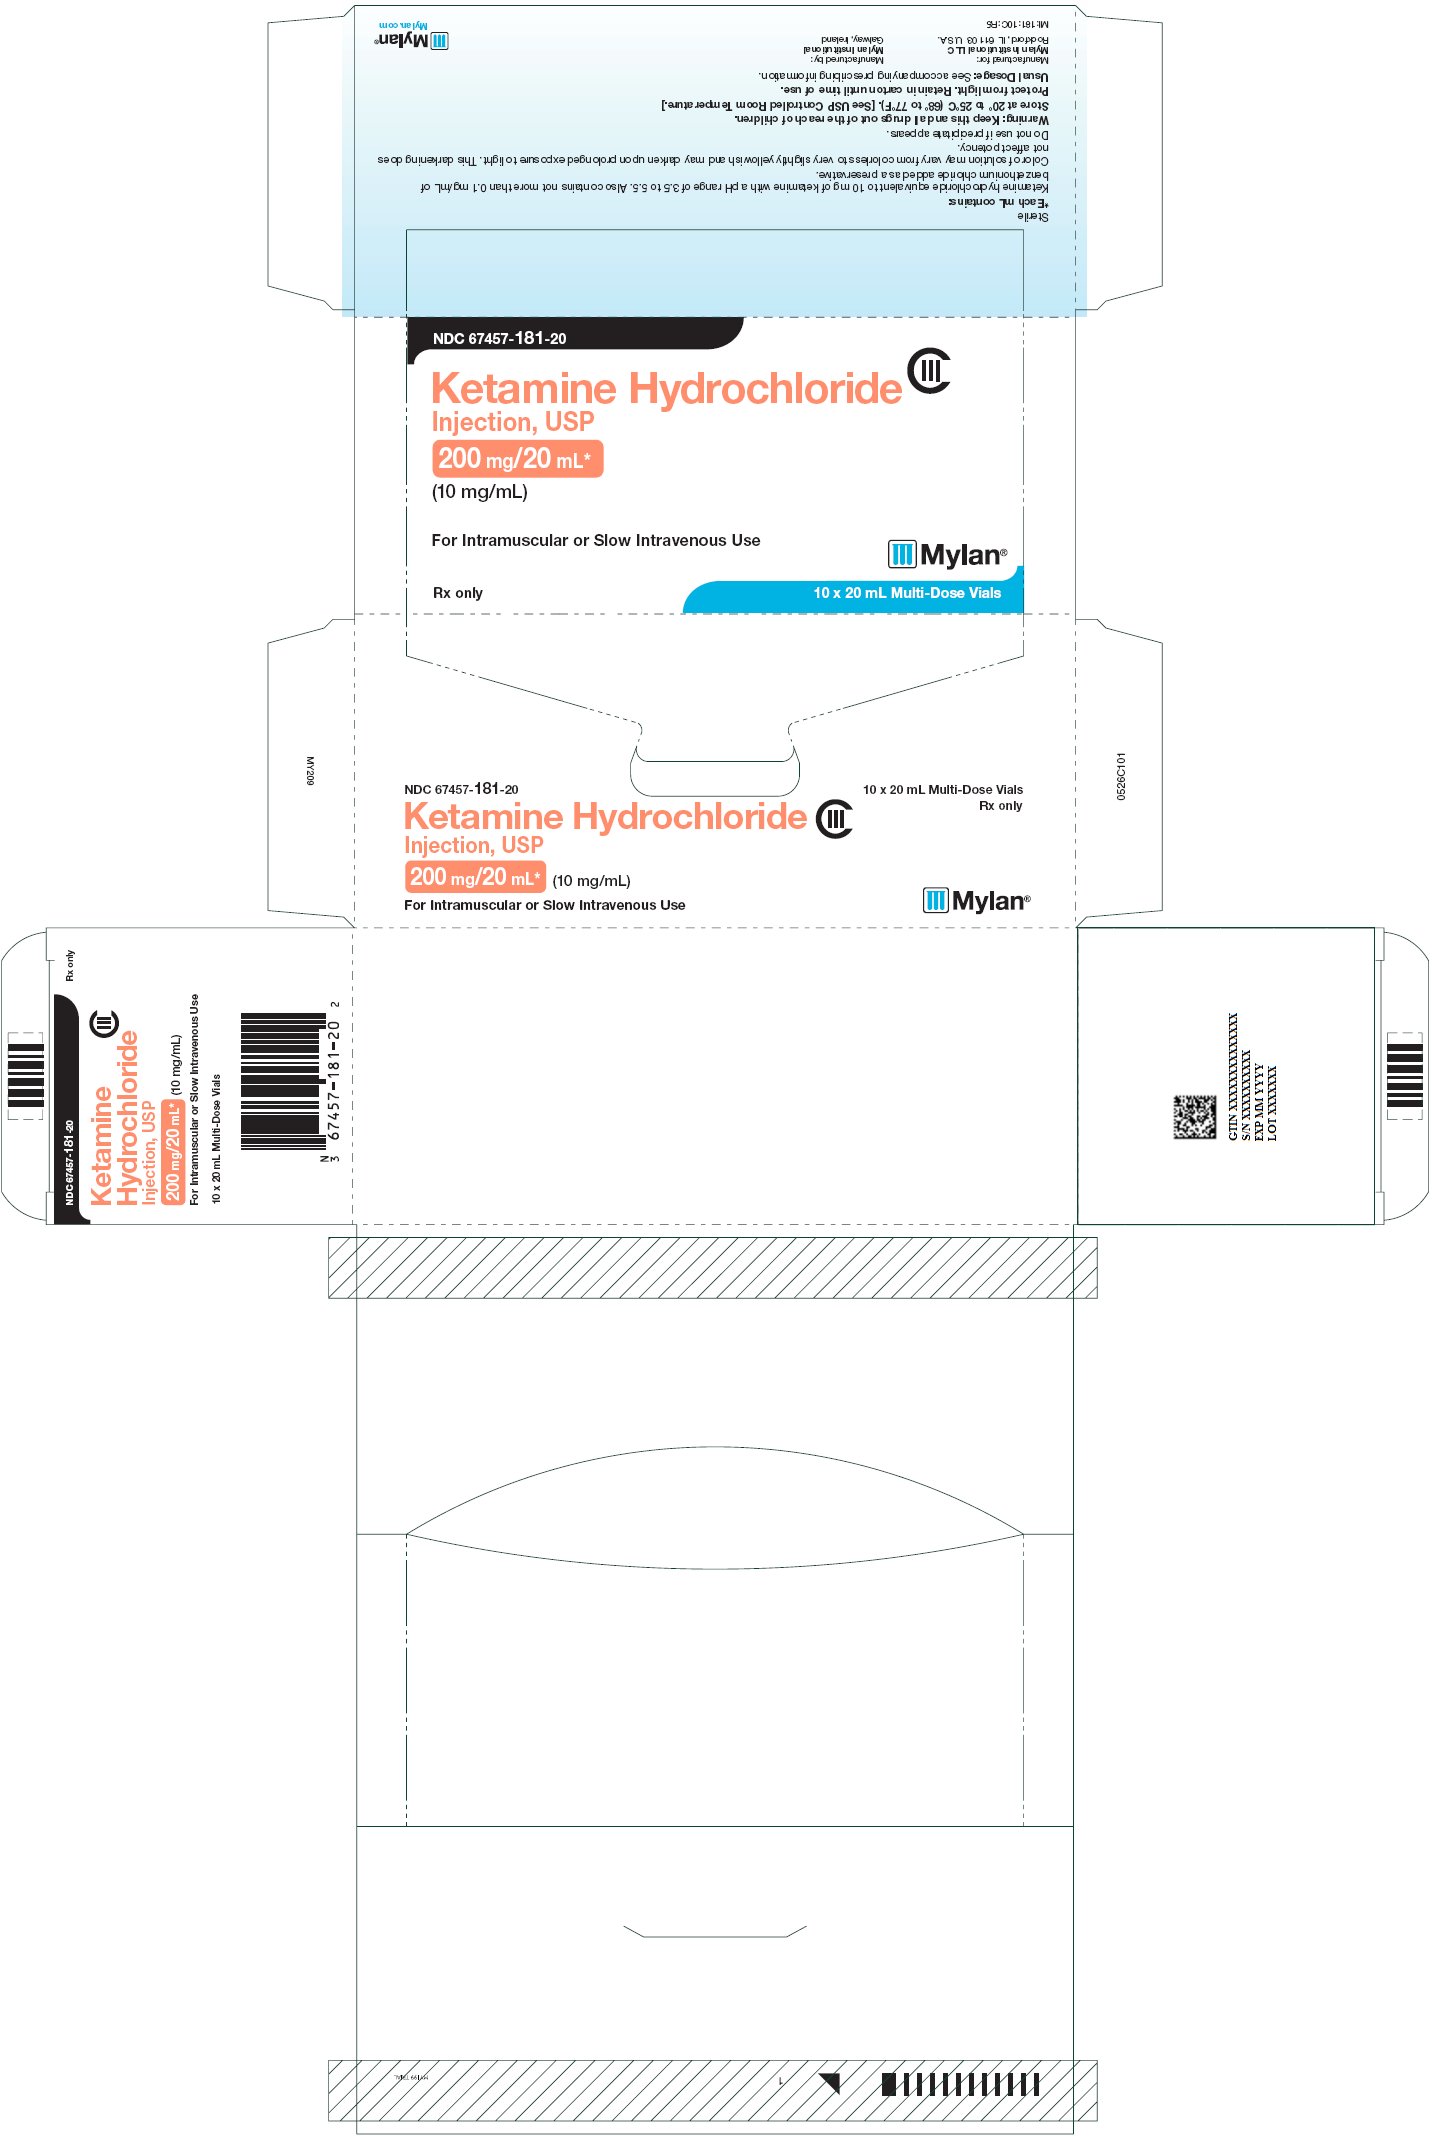 Ketamine Hydrochloride Injection 200 mg/20 mL Carton Label